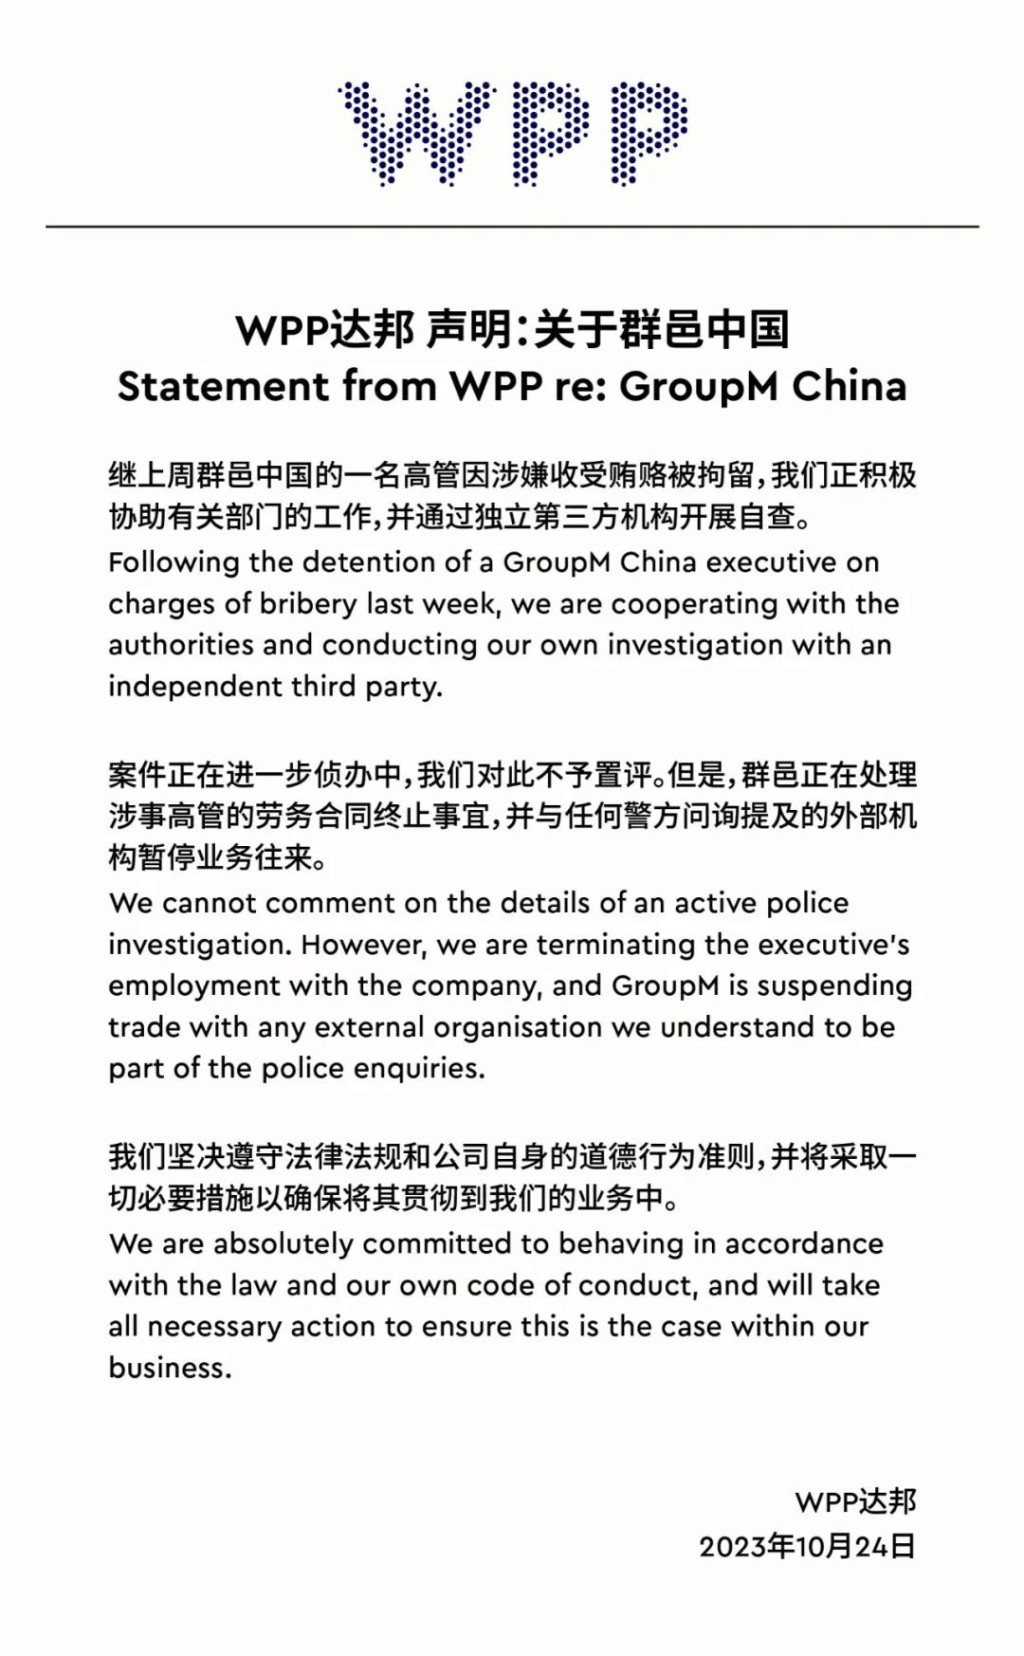 WPP發聲明宣布將解僱在華受查員工。 